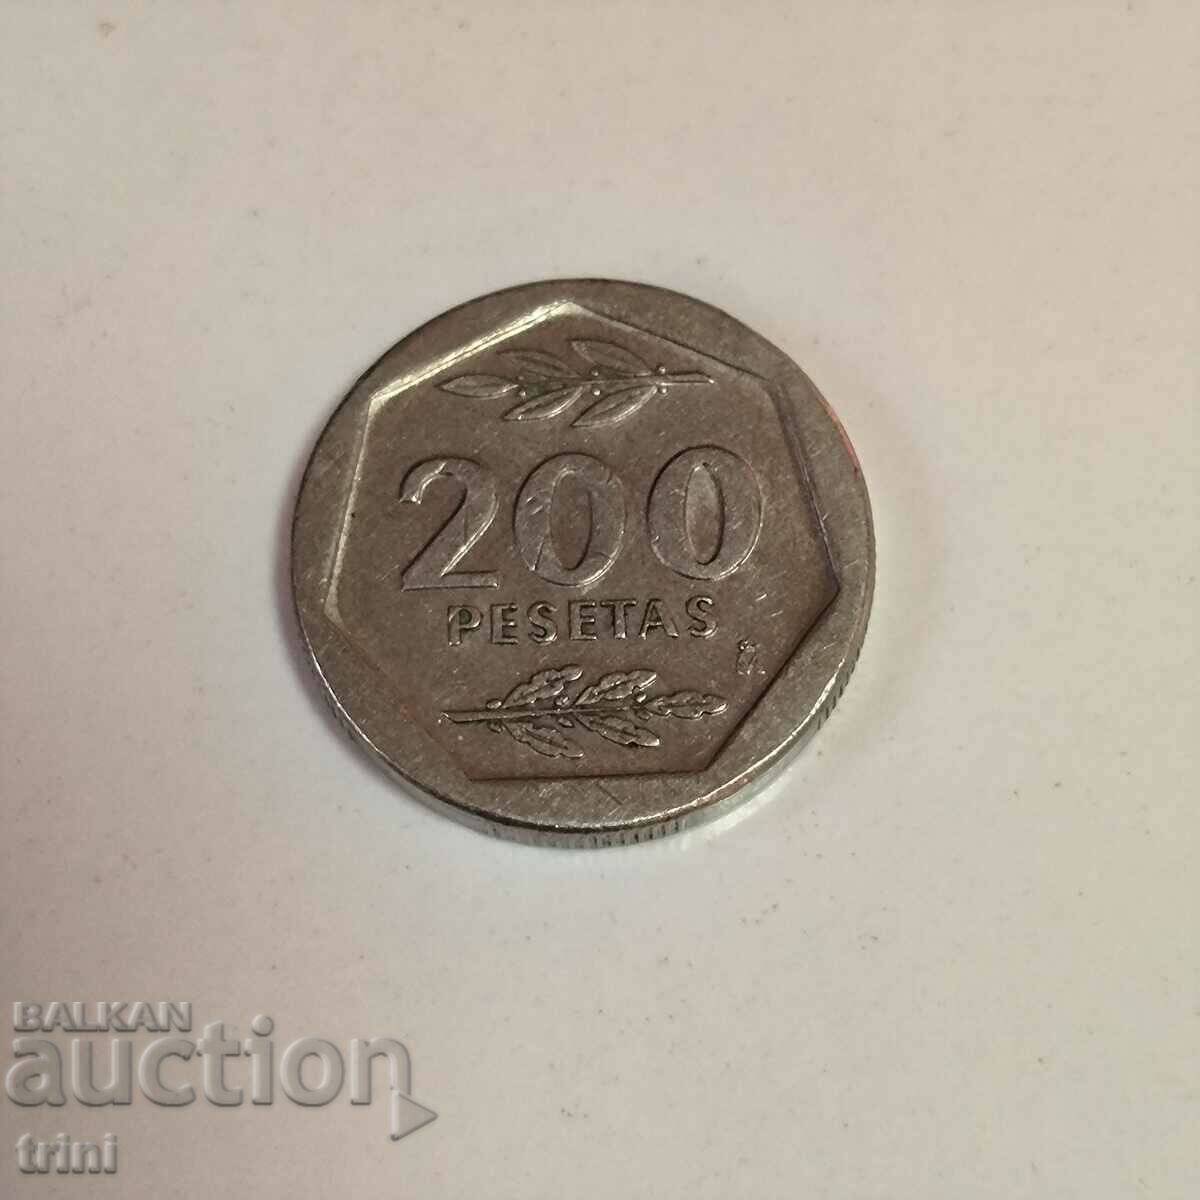 Spain 200 pesetas 1988 year g57